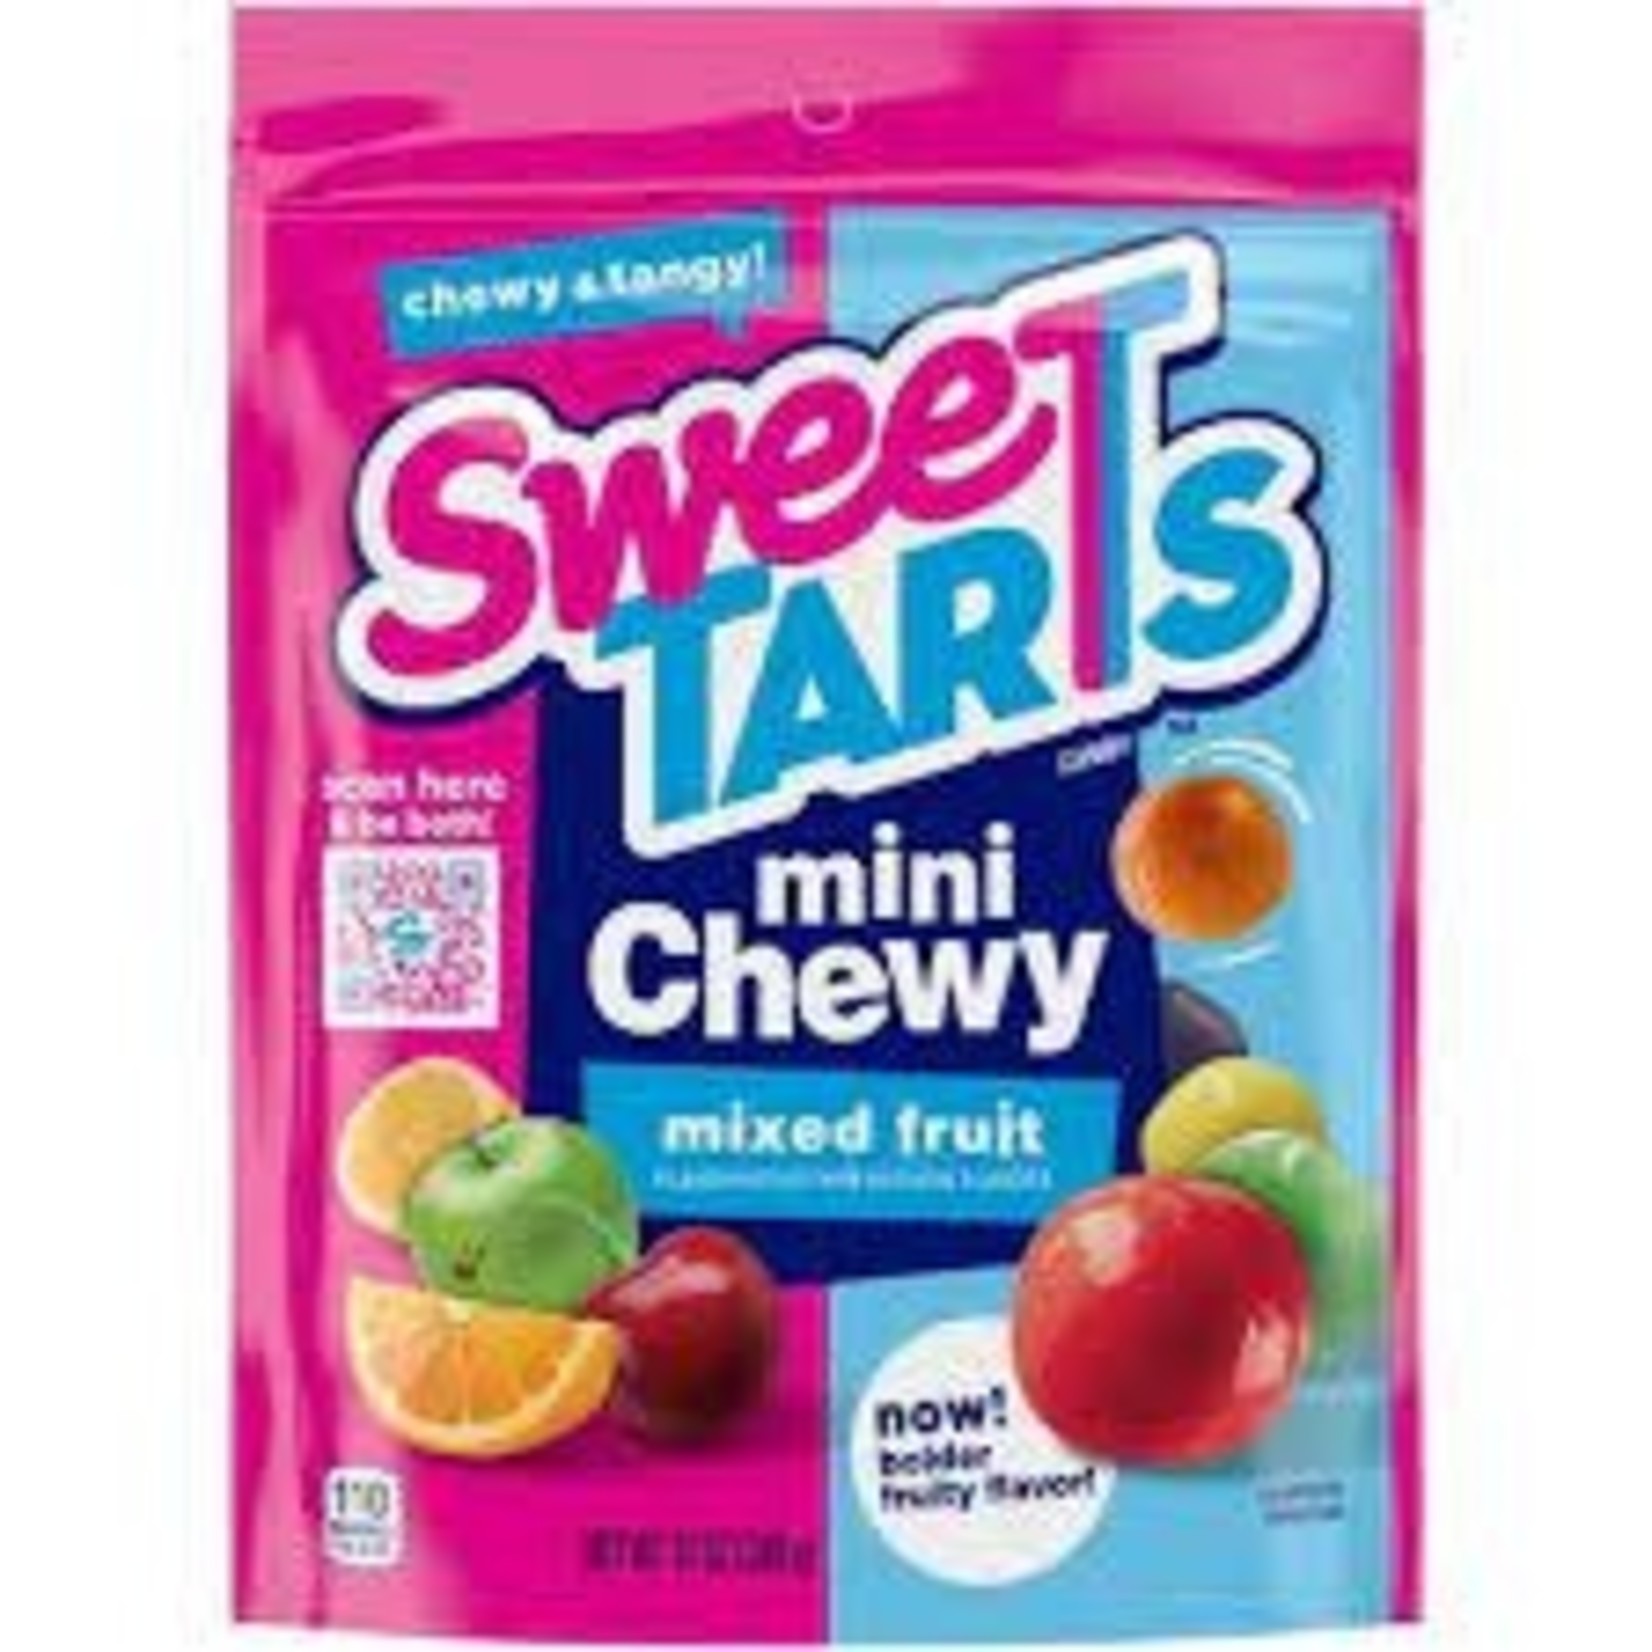 Sweet Tarts mini Chewy mixed fruit 12oz